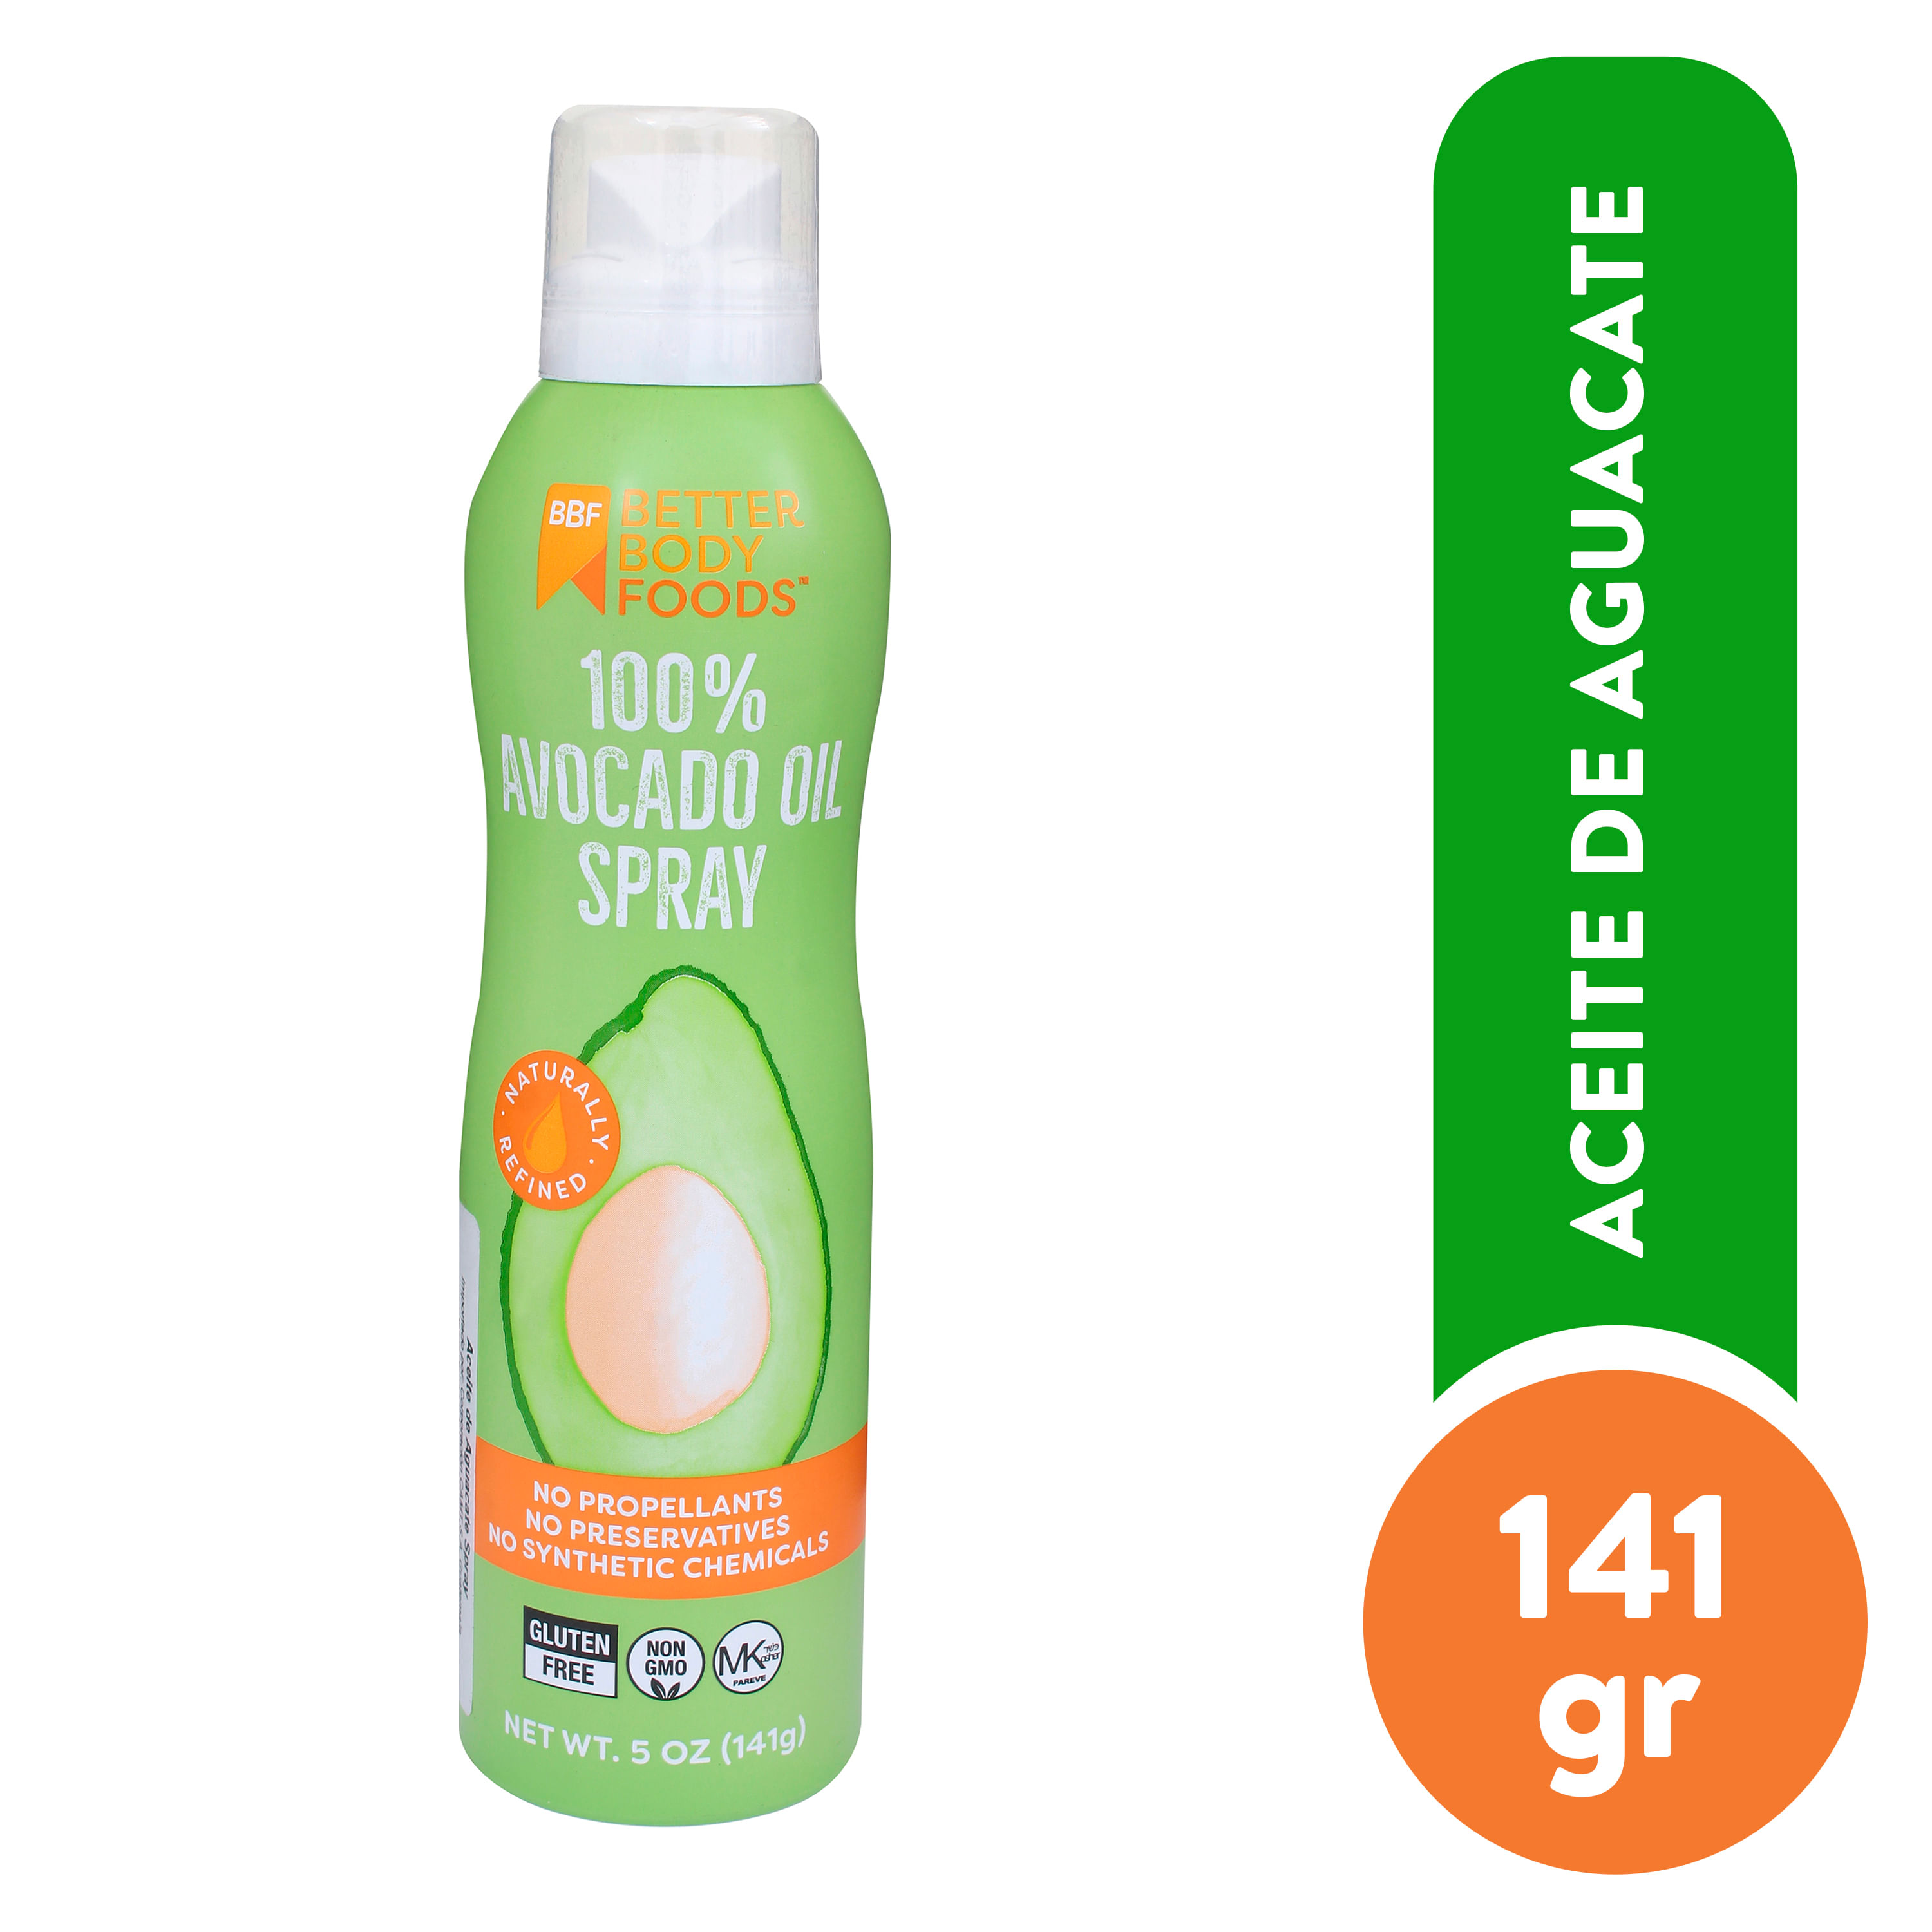 Aceite-De-Aguacate-Better-Body-Foods-Spray-141gr-1-52416